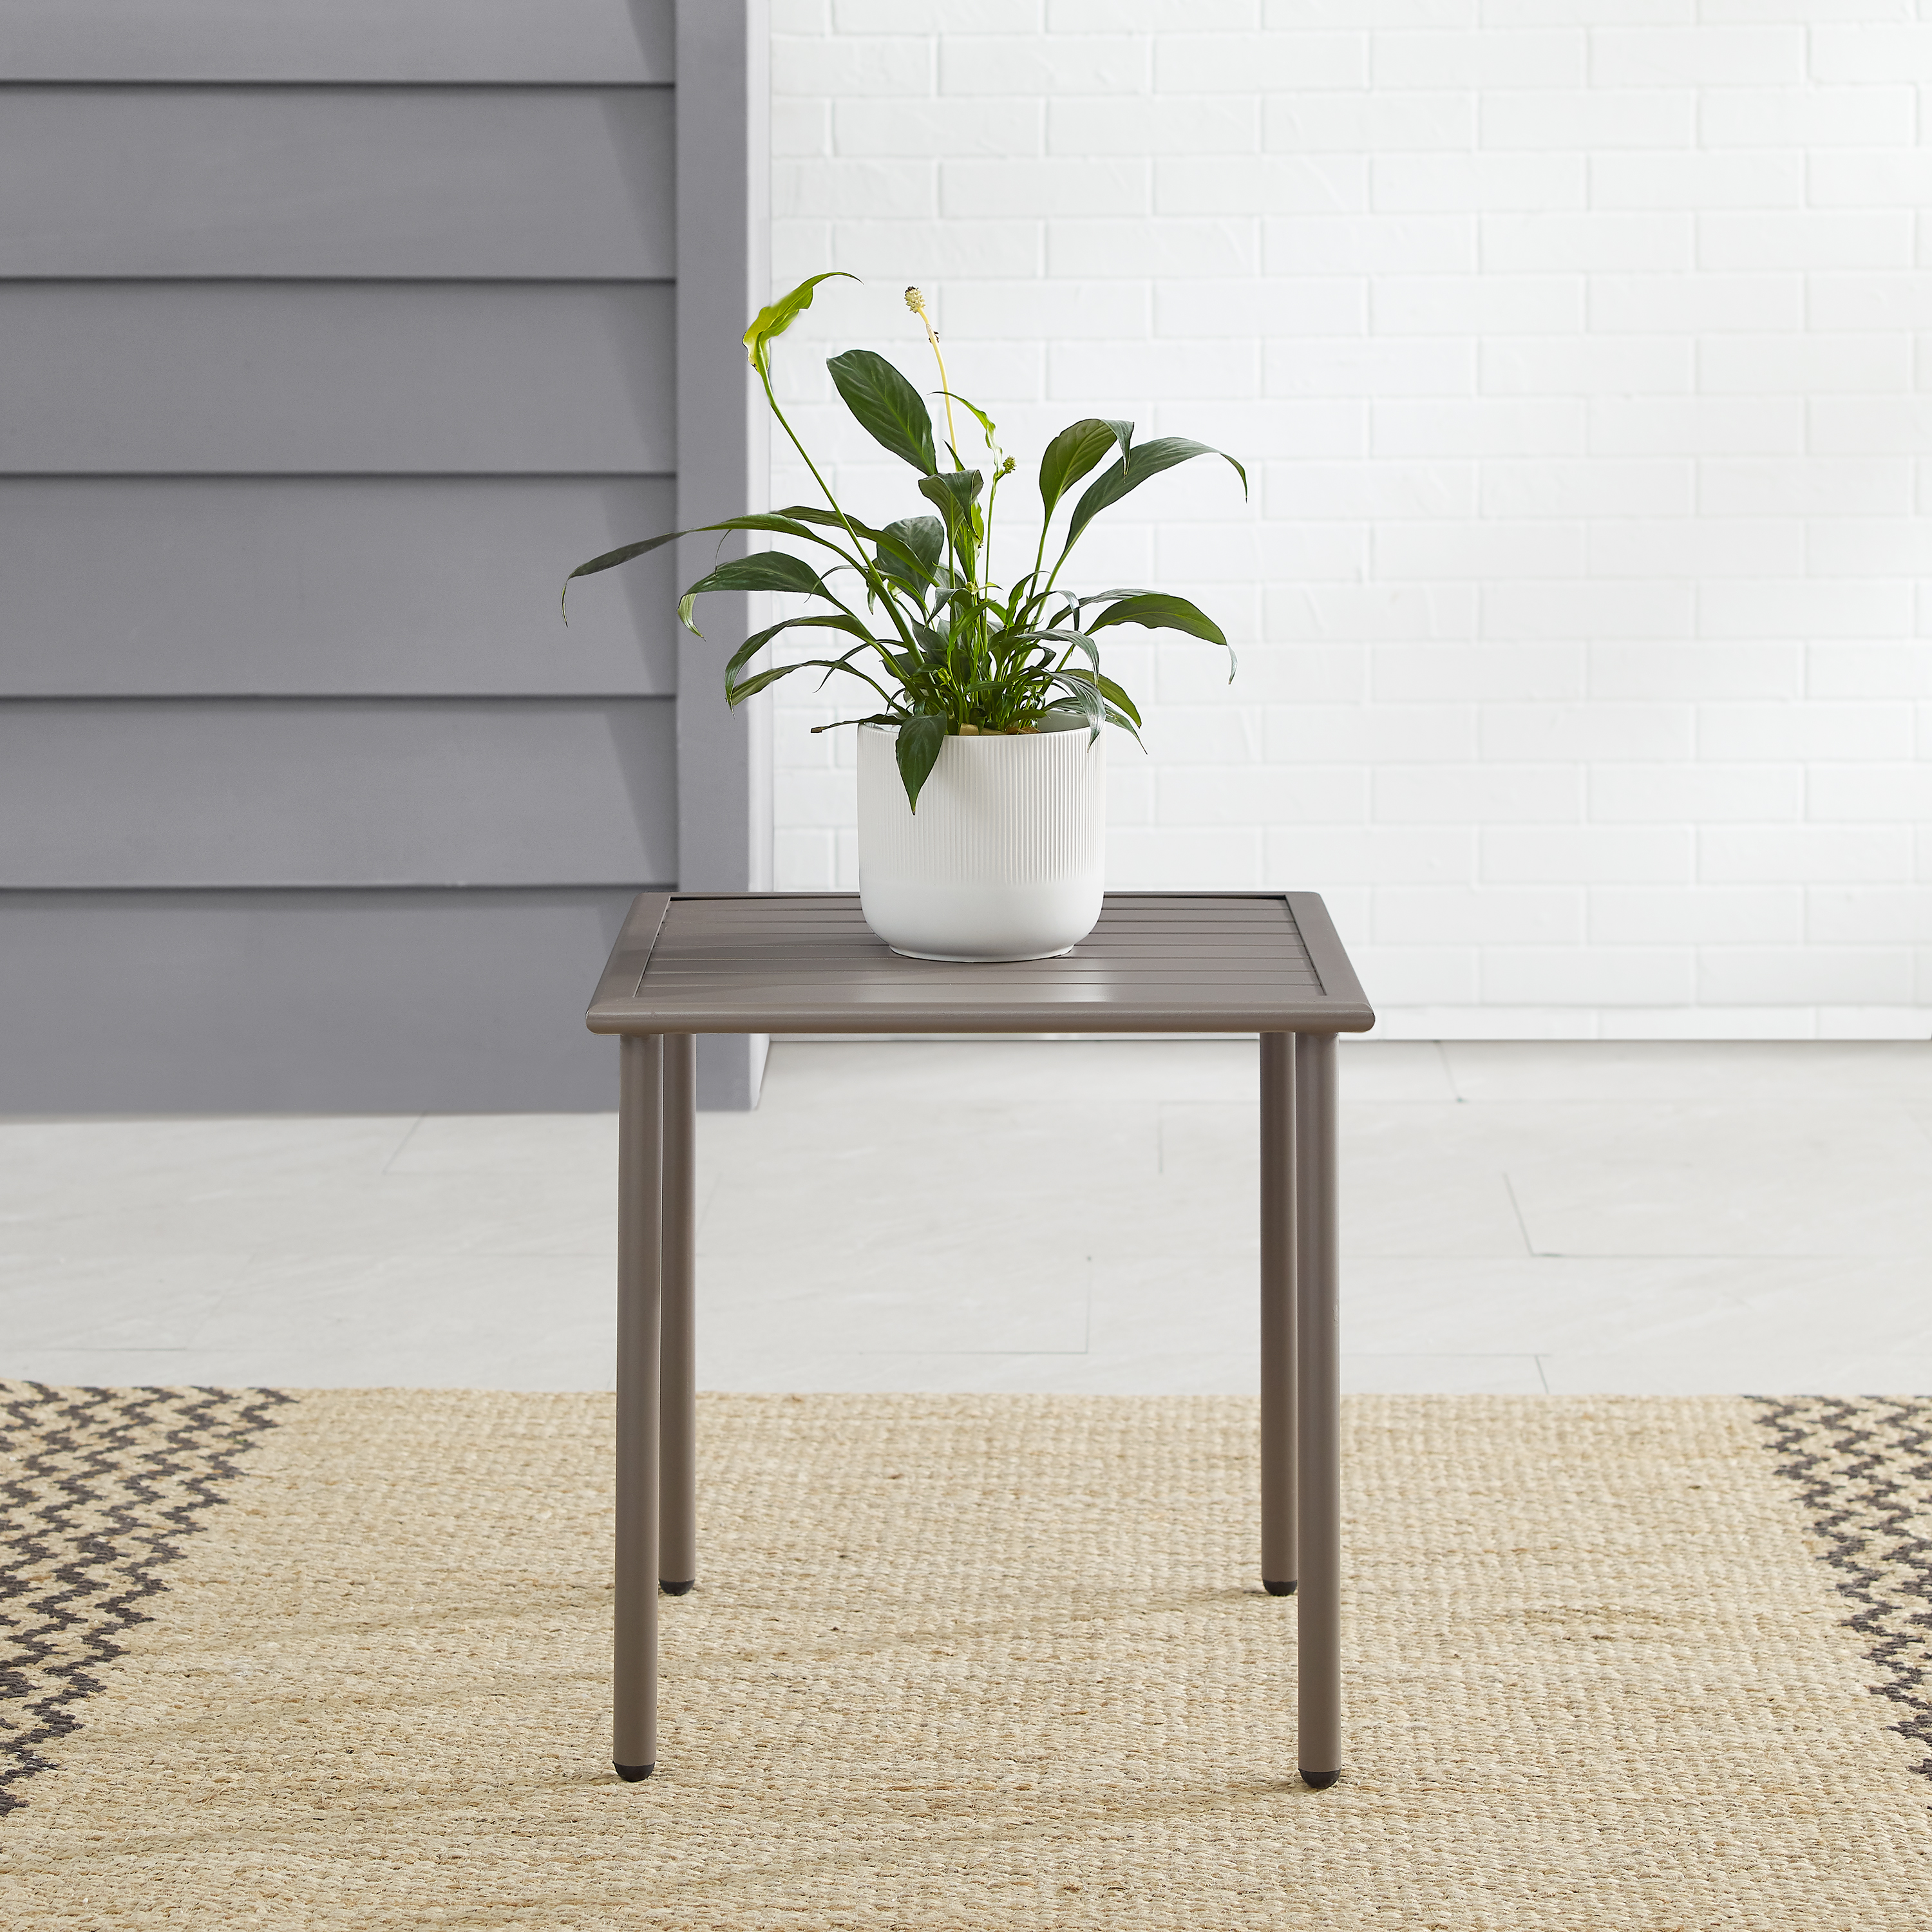 Crosley Furniture Cali Bay Modern Metal Outdoor Side Table in Light Brown - image 2 of 6